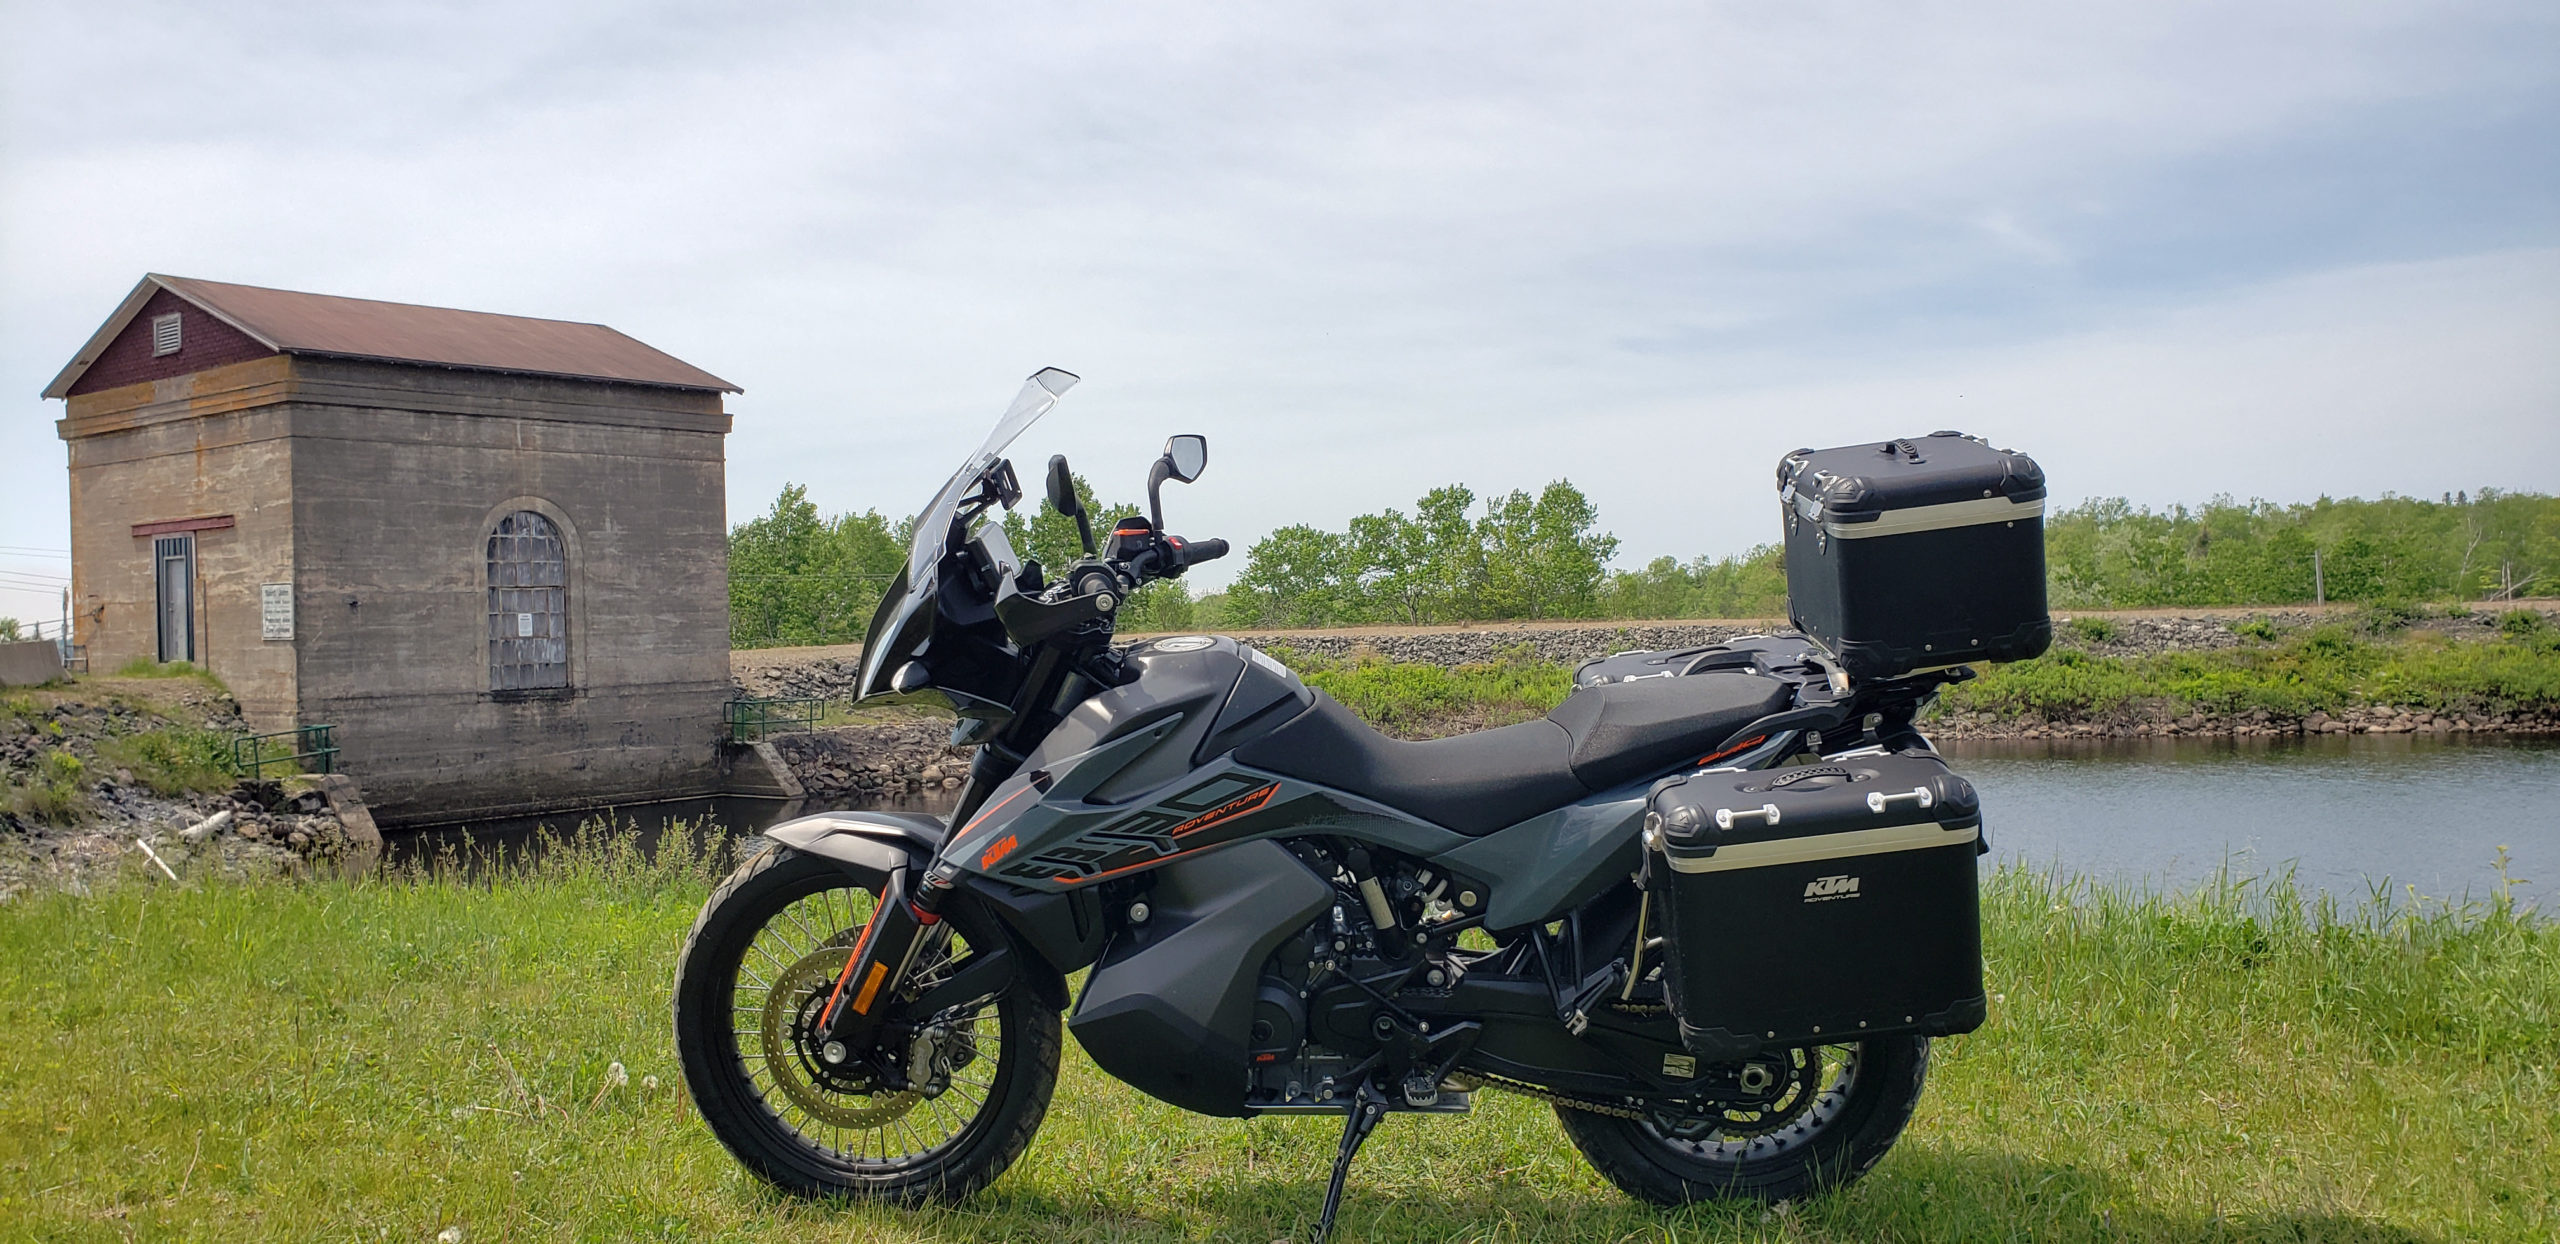 KTM 890 Adventure, Auto review, Adventure rider, Motorcycle adventure, 2560x1250 Dual Screen Desktop